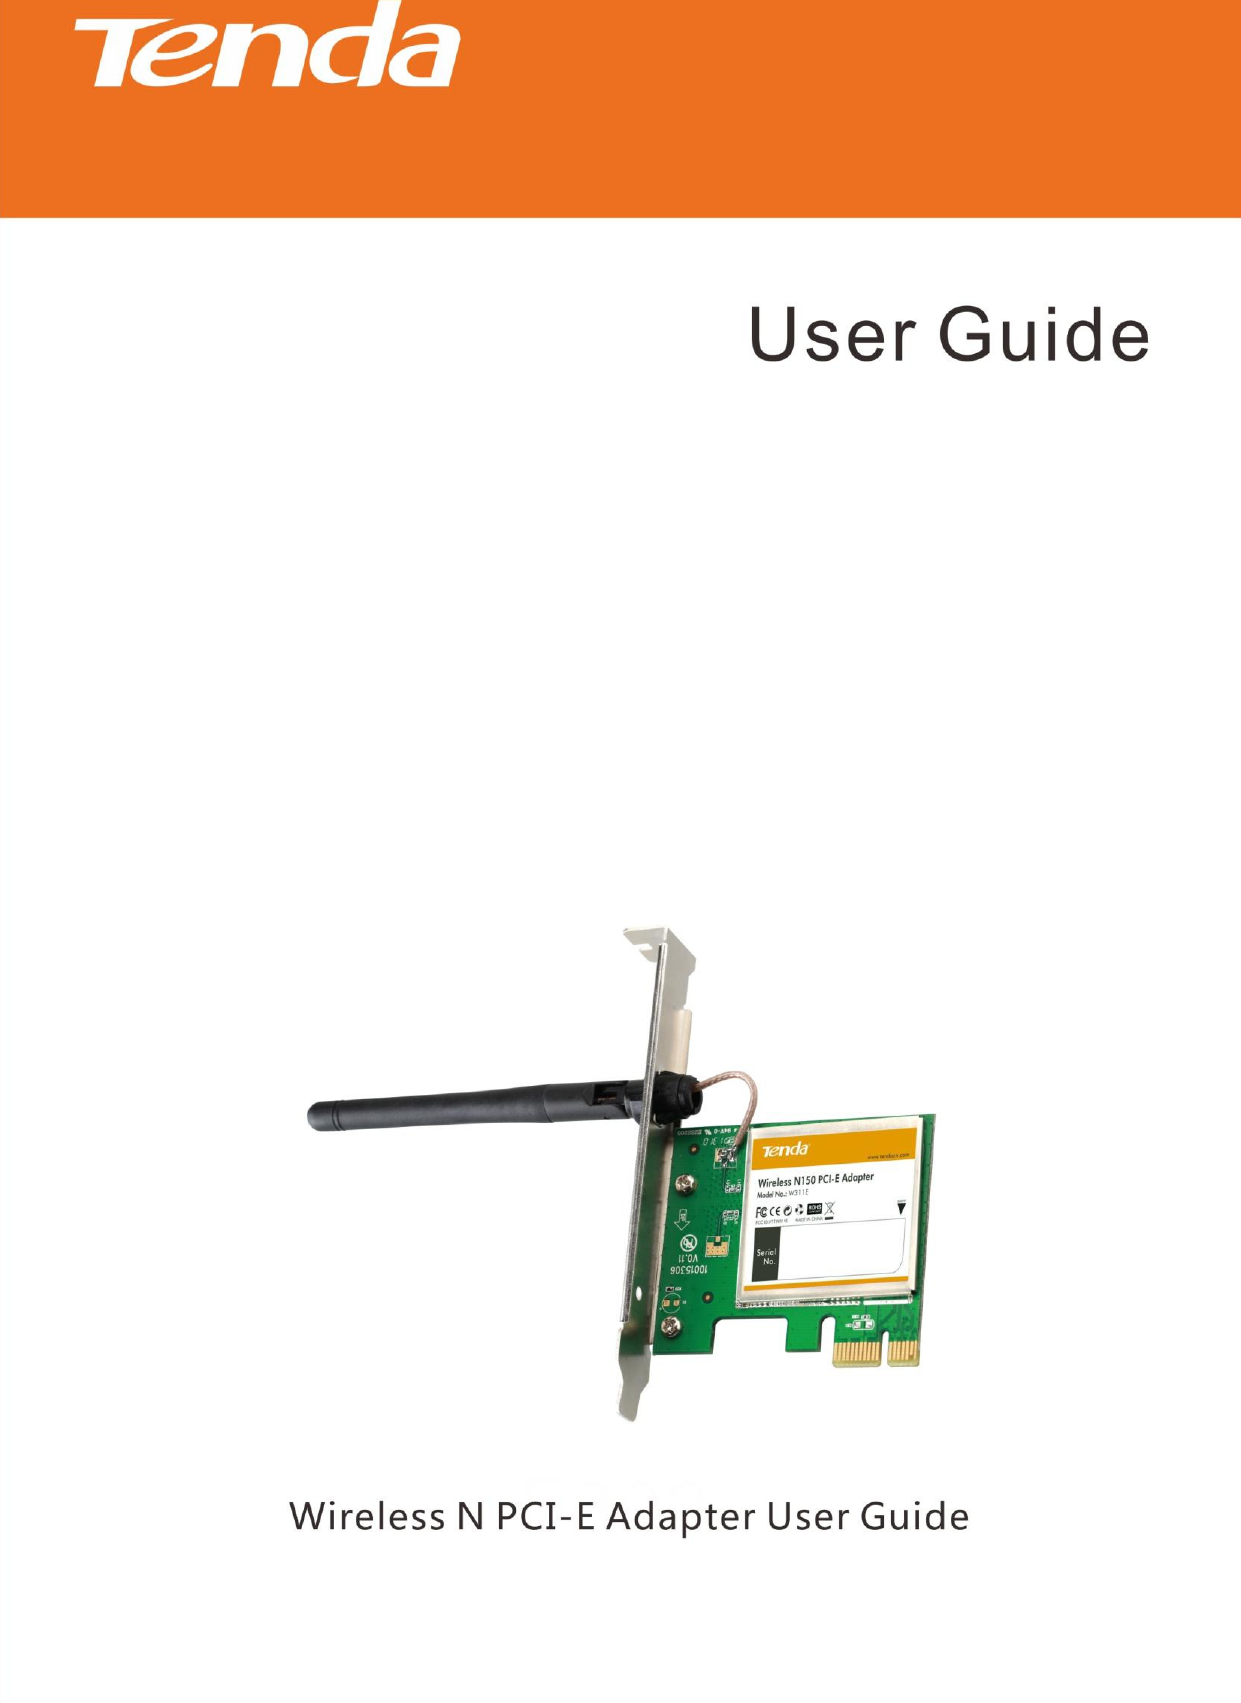                                    Wireless N PCI-E Adapter User Guide 